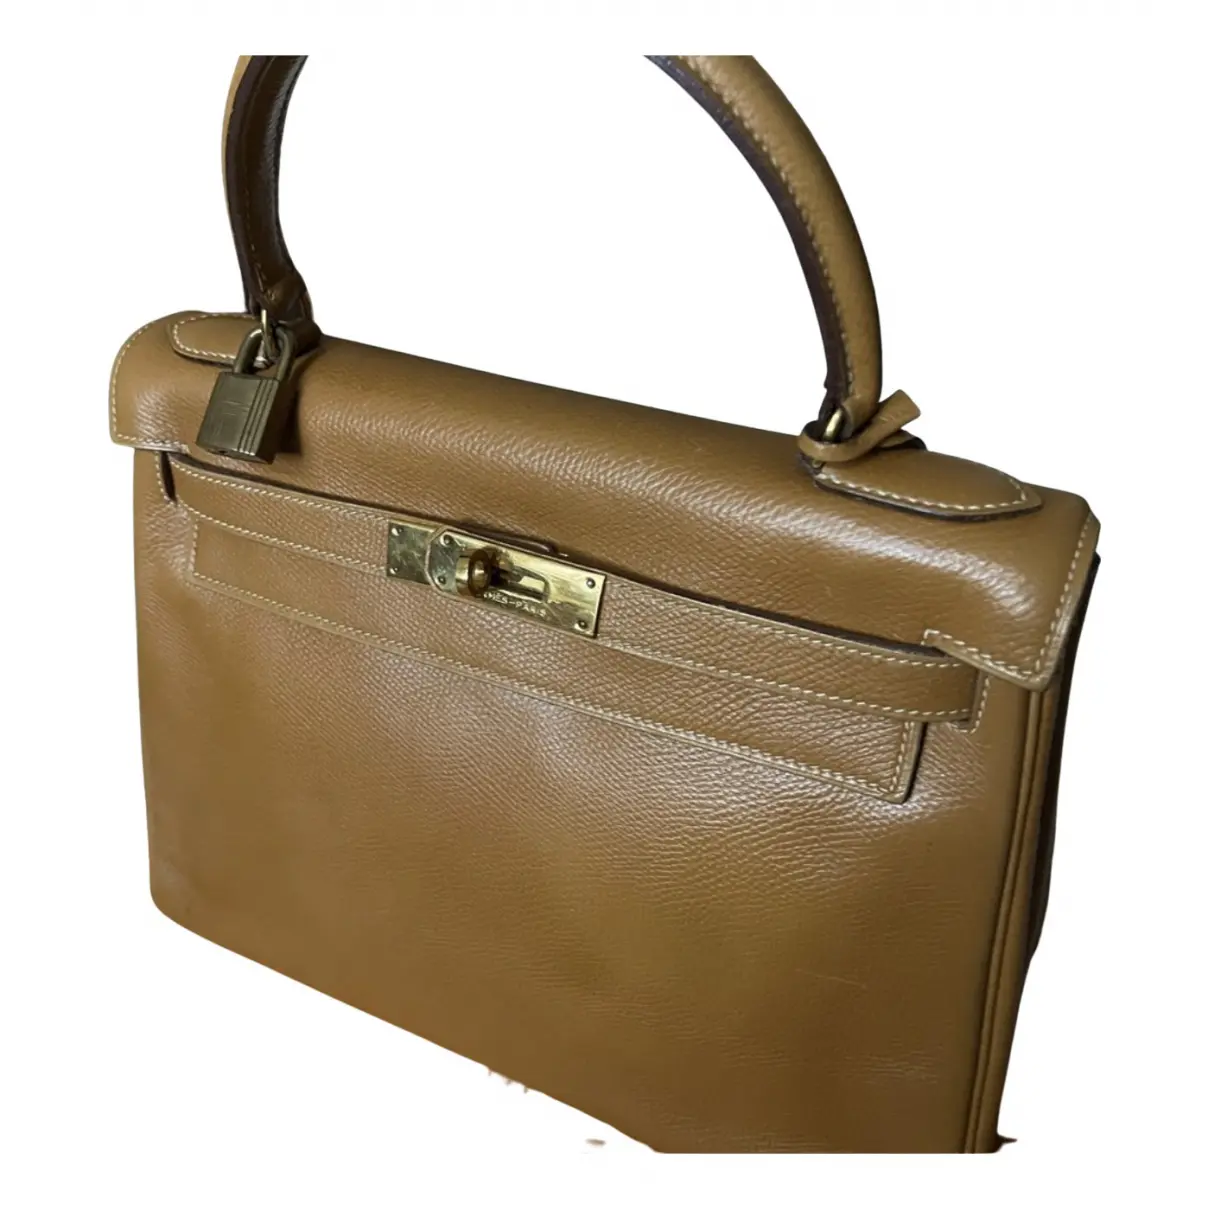 Kelly 28 leather handbag Hermès - Vintage